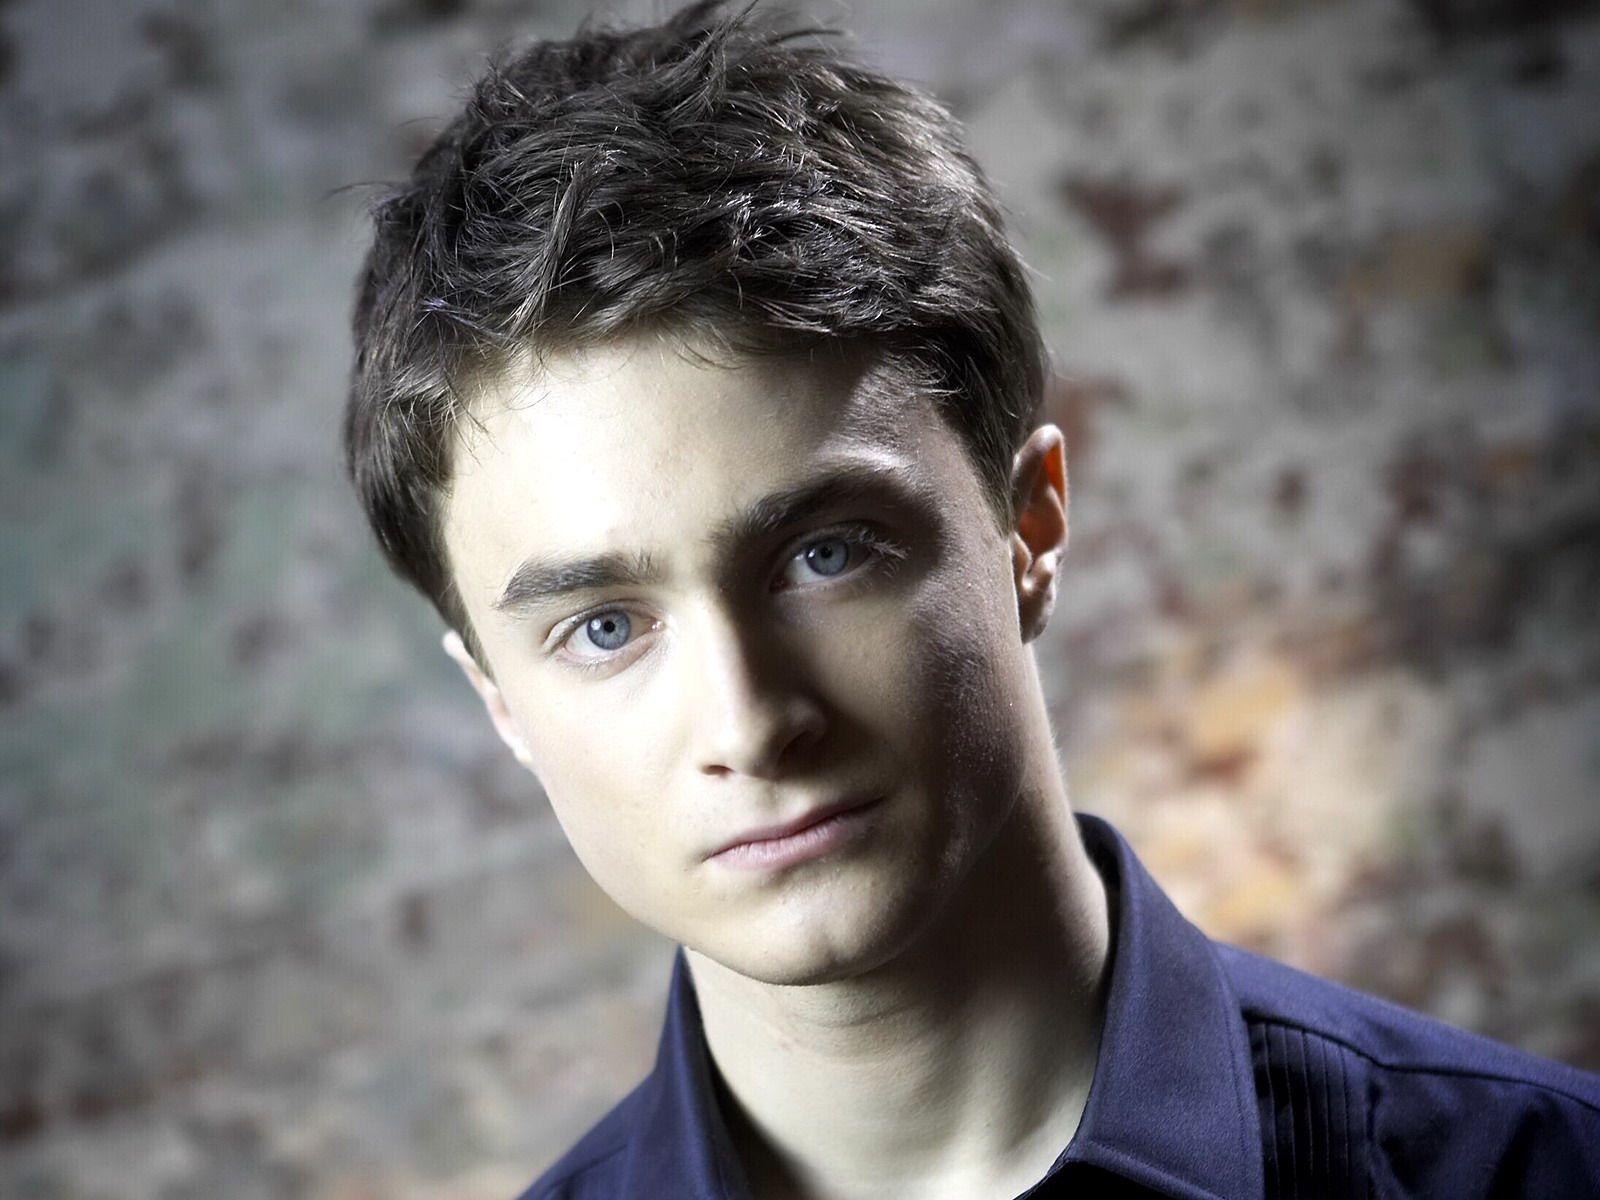 Daniel Radcliffe Background 1 HD Wallpaper. lzamgs